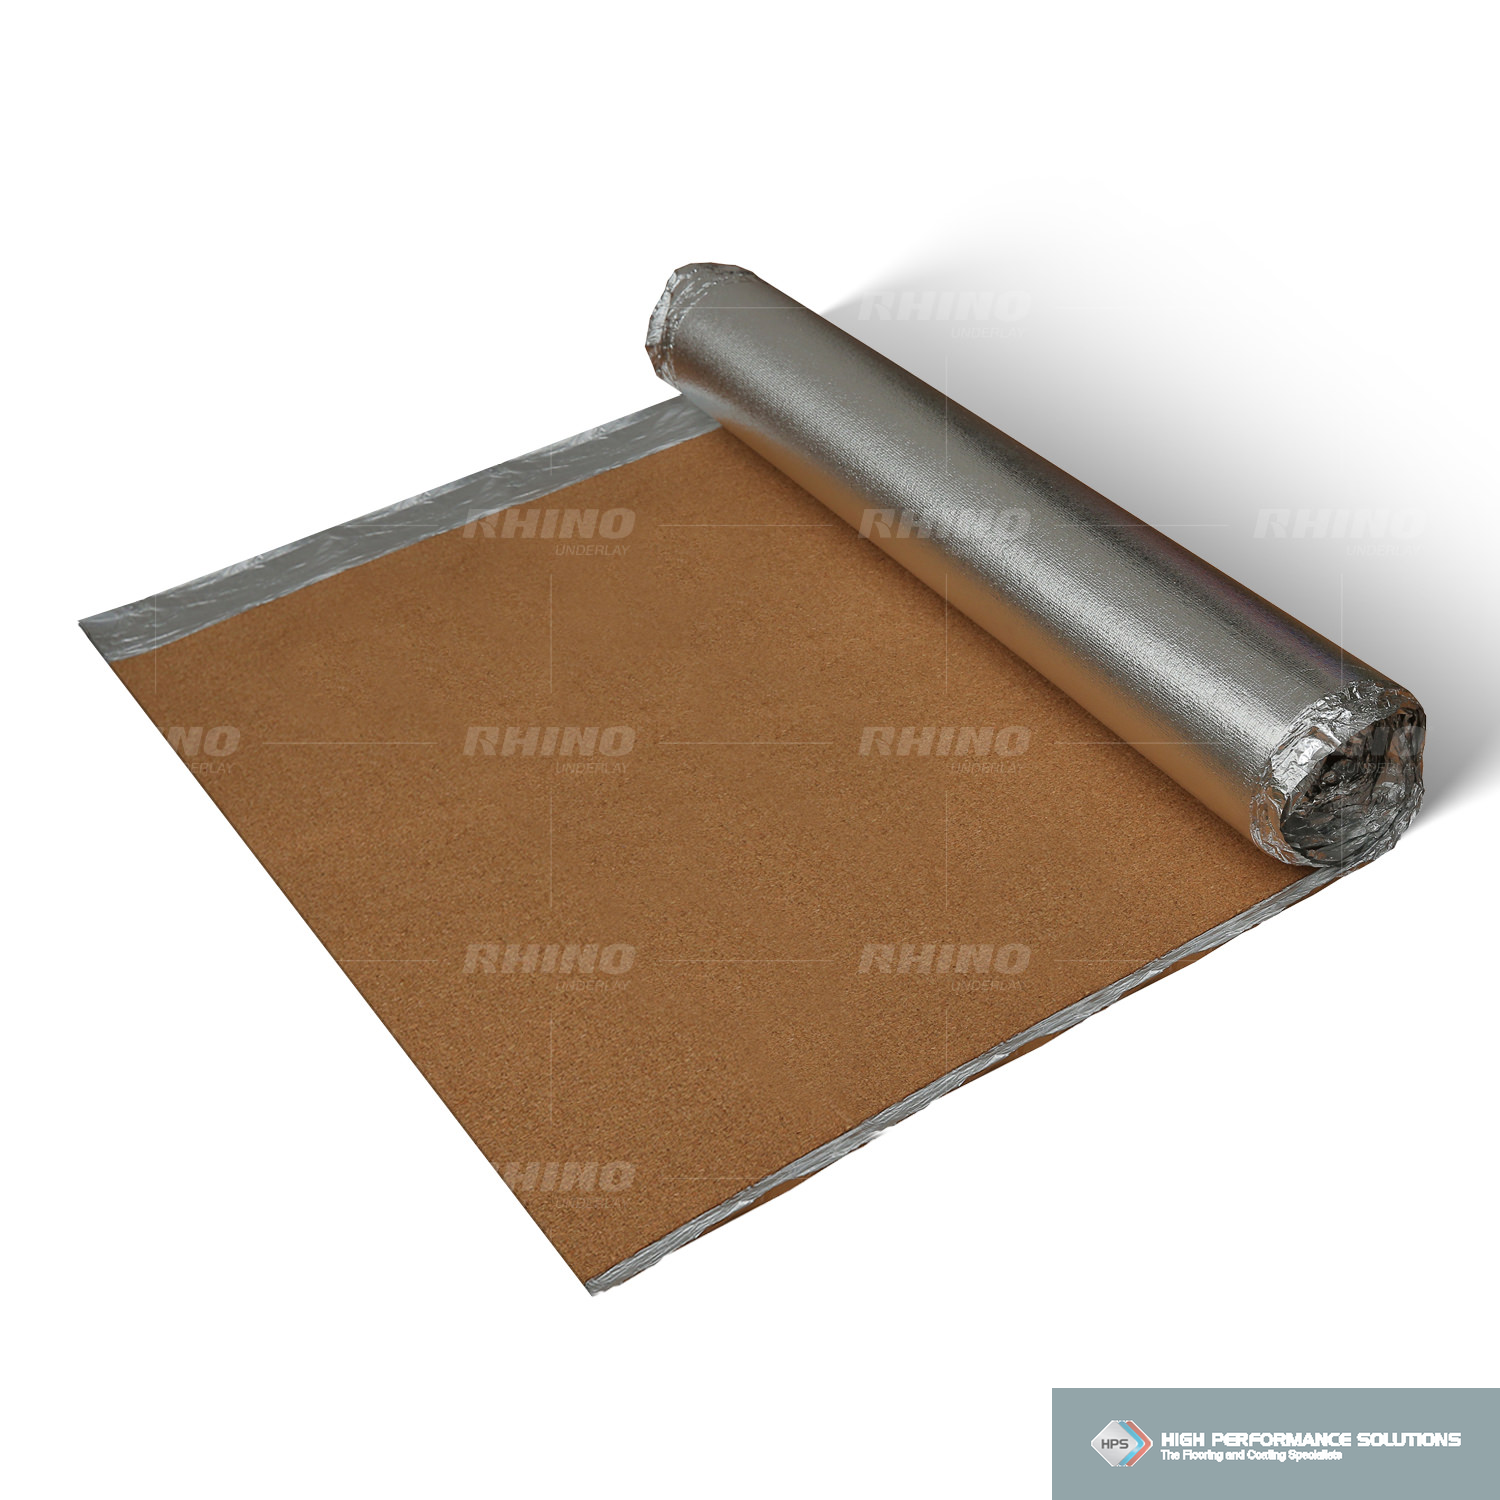 Raised Flooring Philippines - SolidFeel Cork